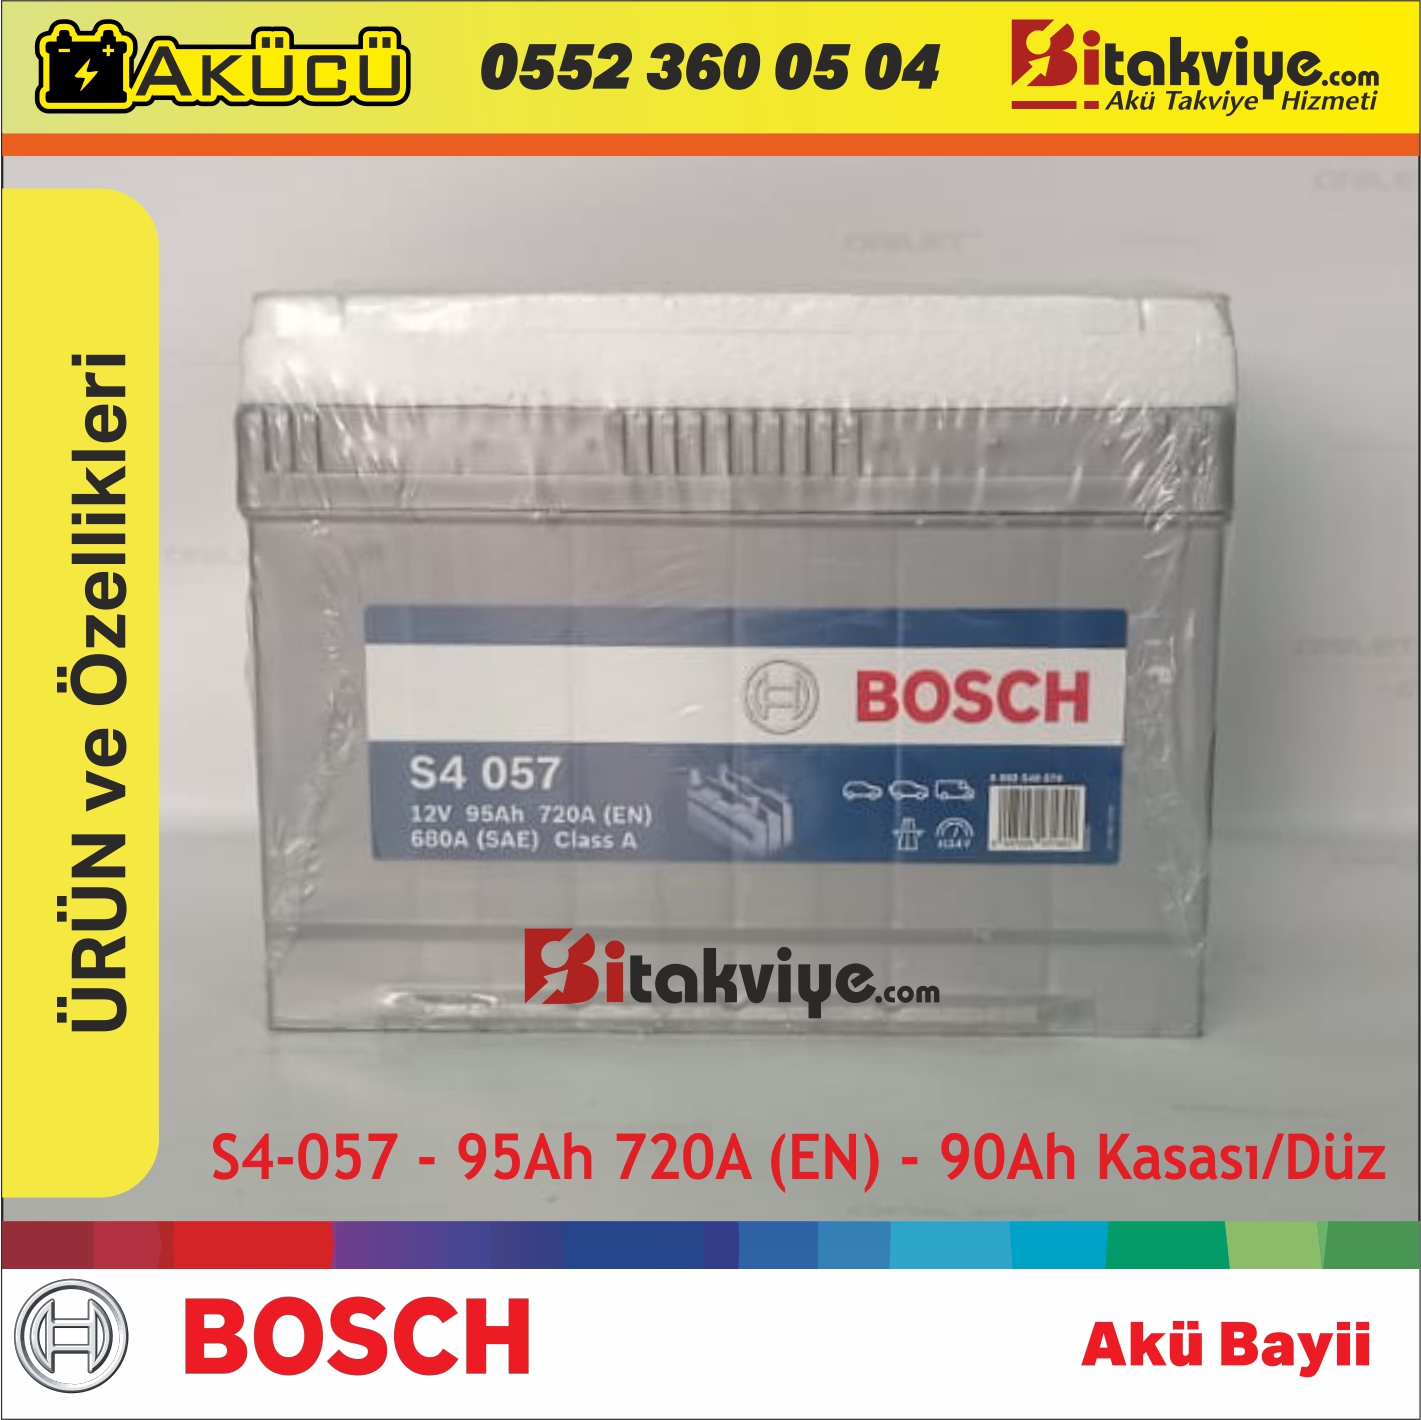 Bosch S4 057 12 V 95 Ah - 720 A (EN) Akü